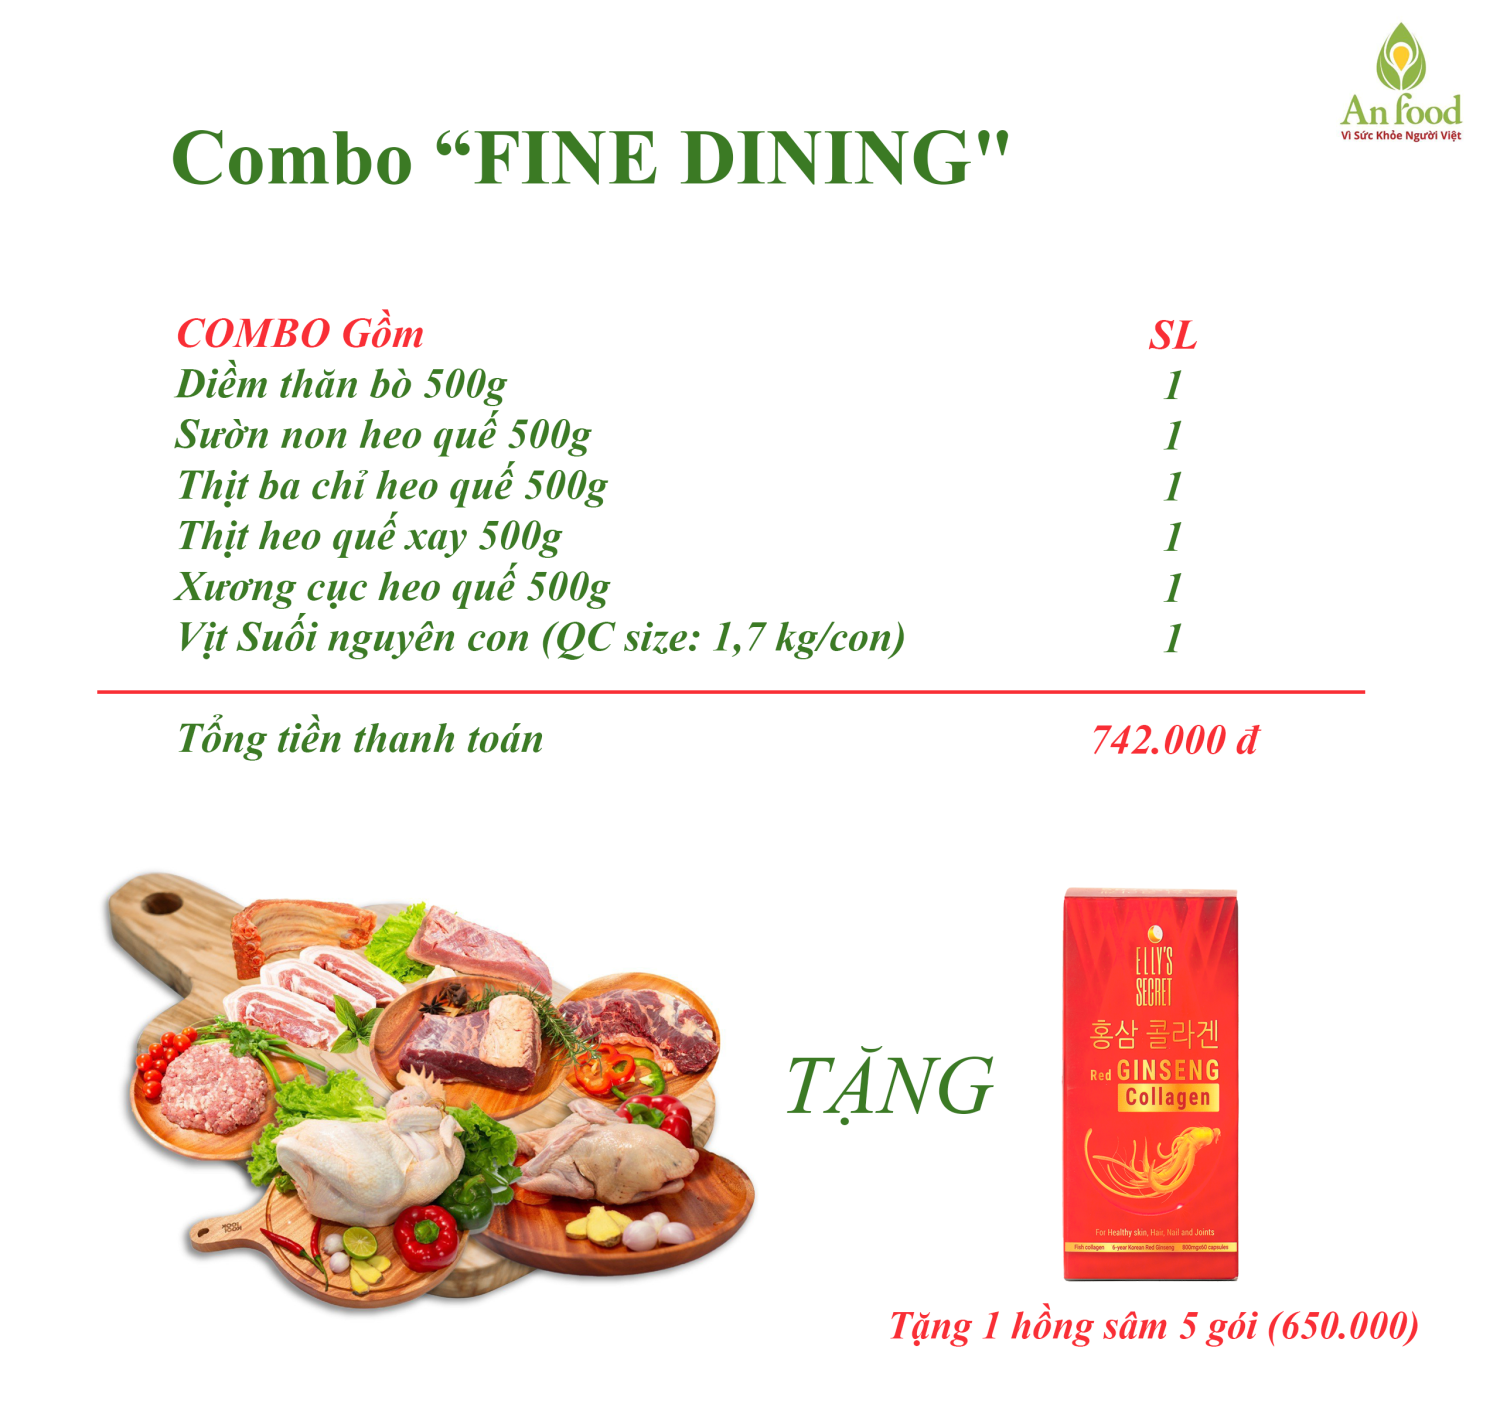 COMBO: FINE DINING